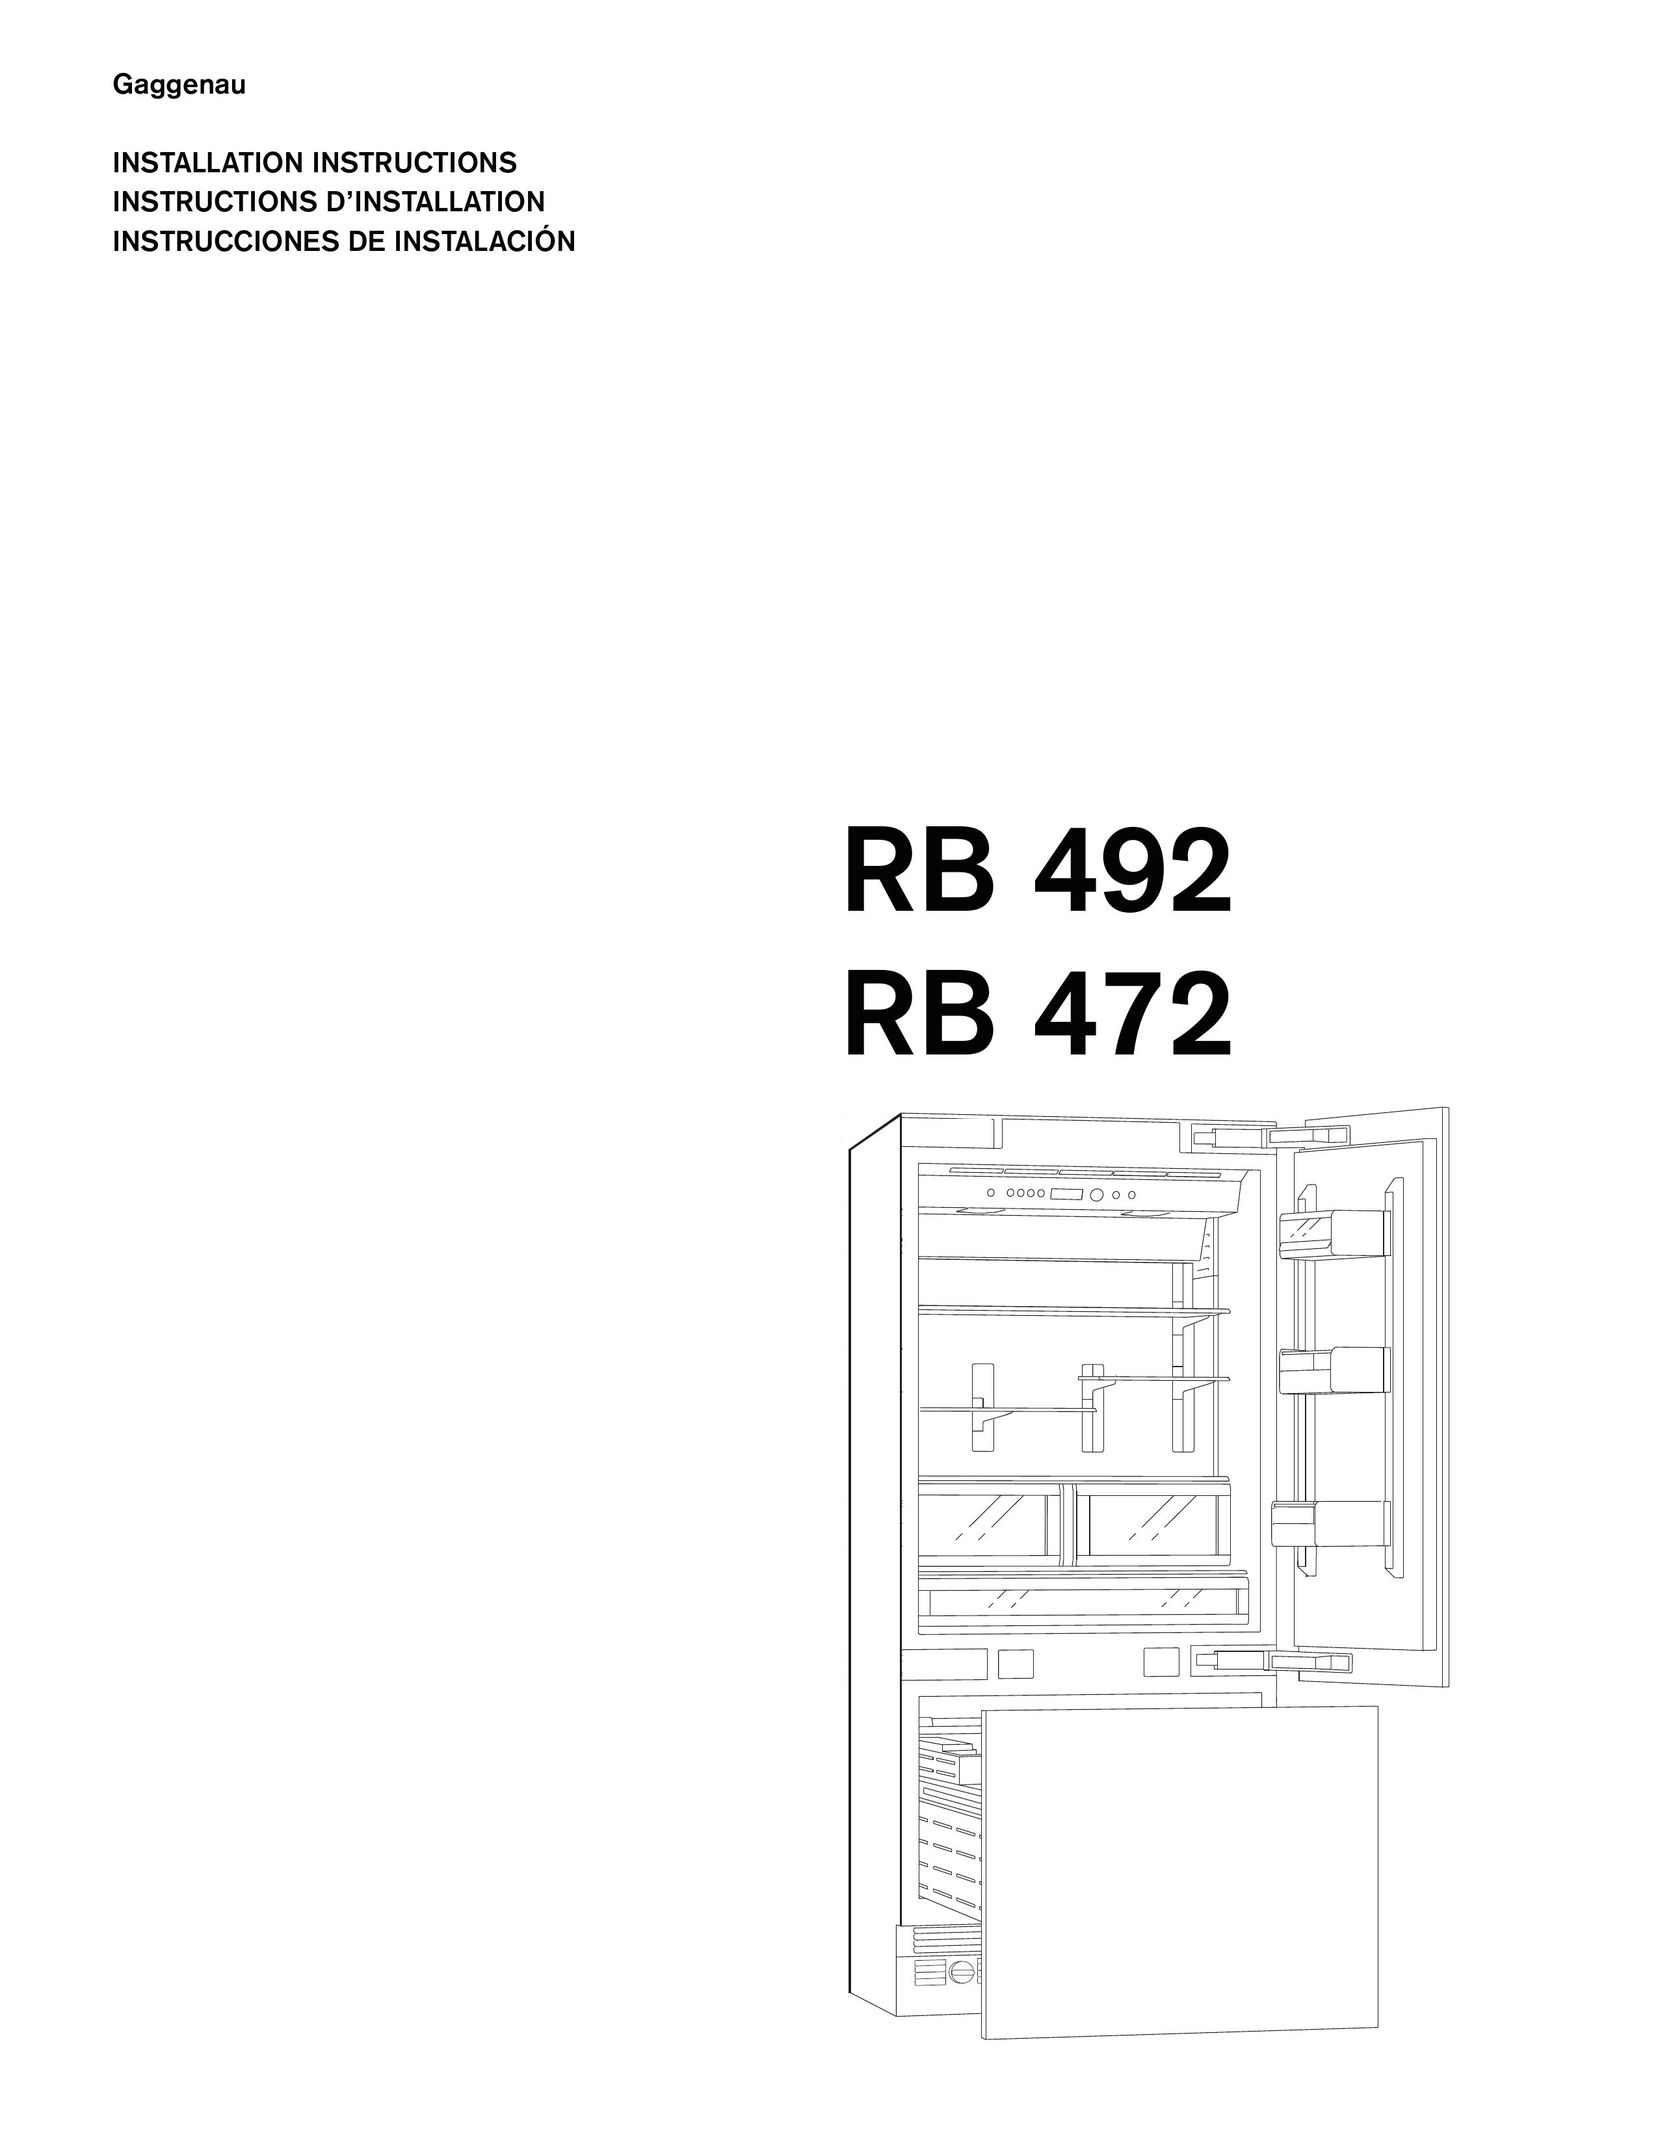 Gaggenau RB 472 Freezer User Manual